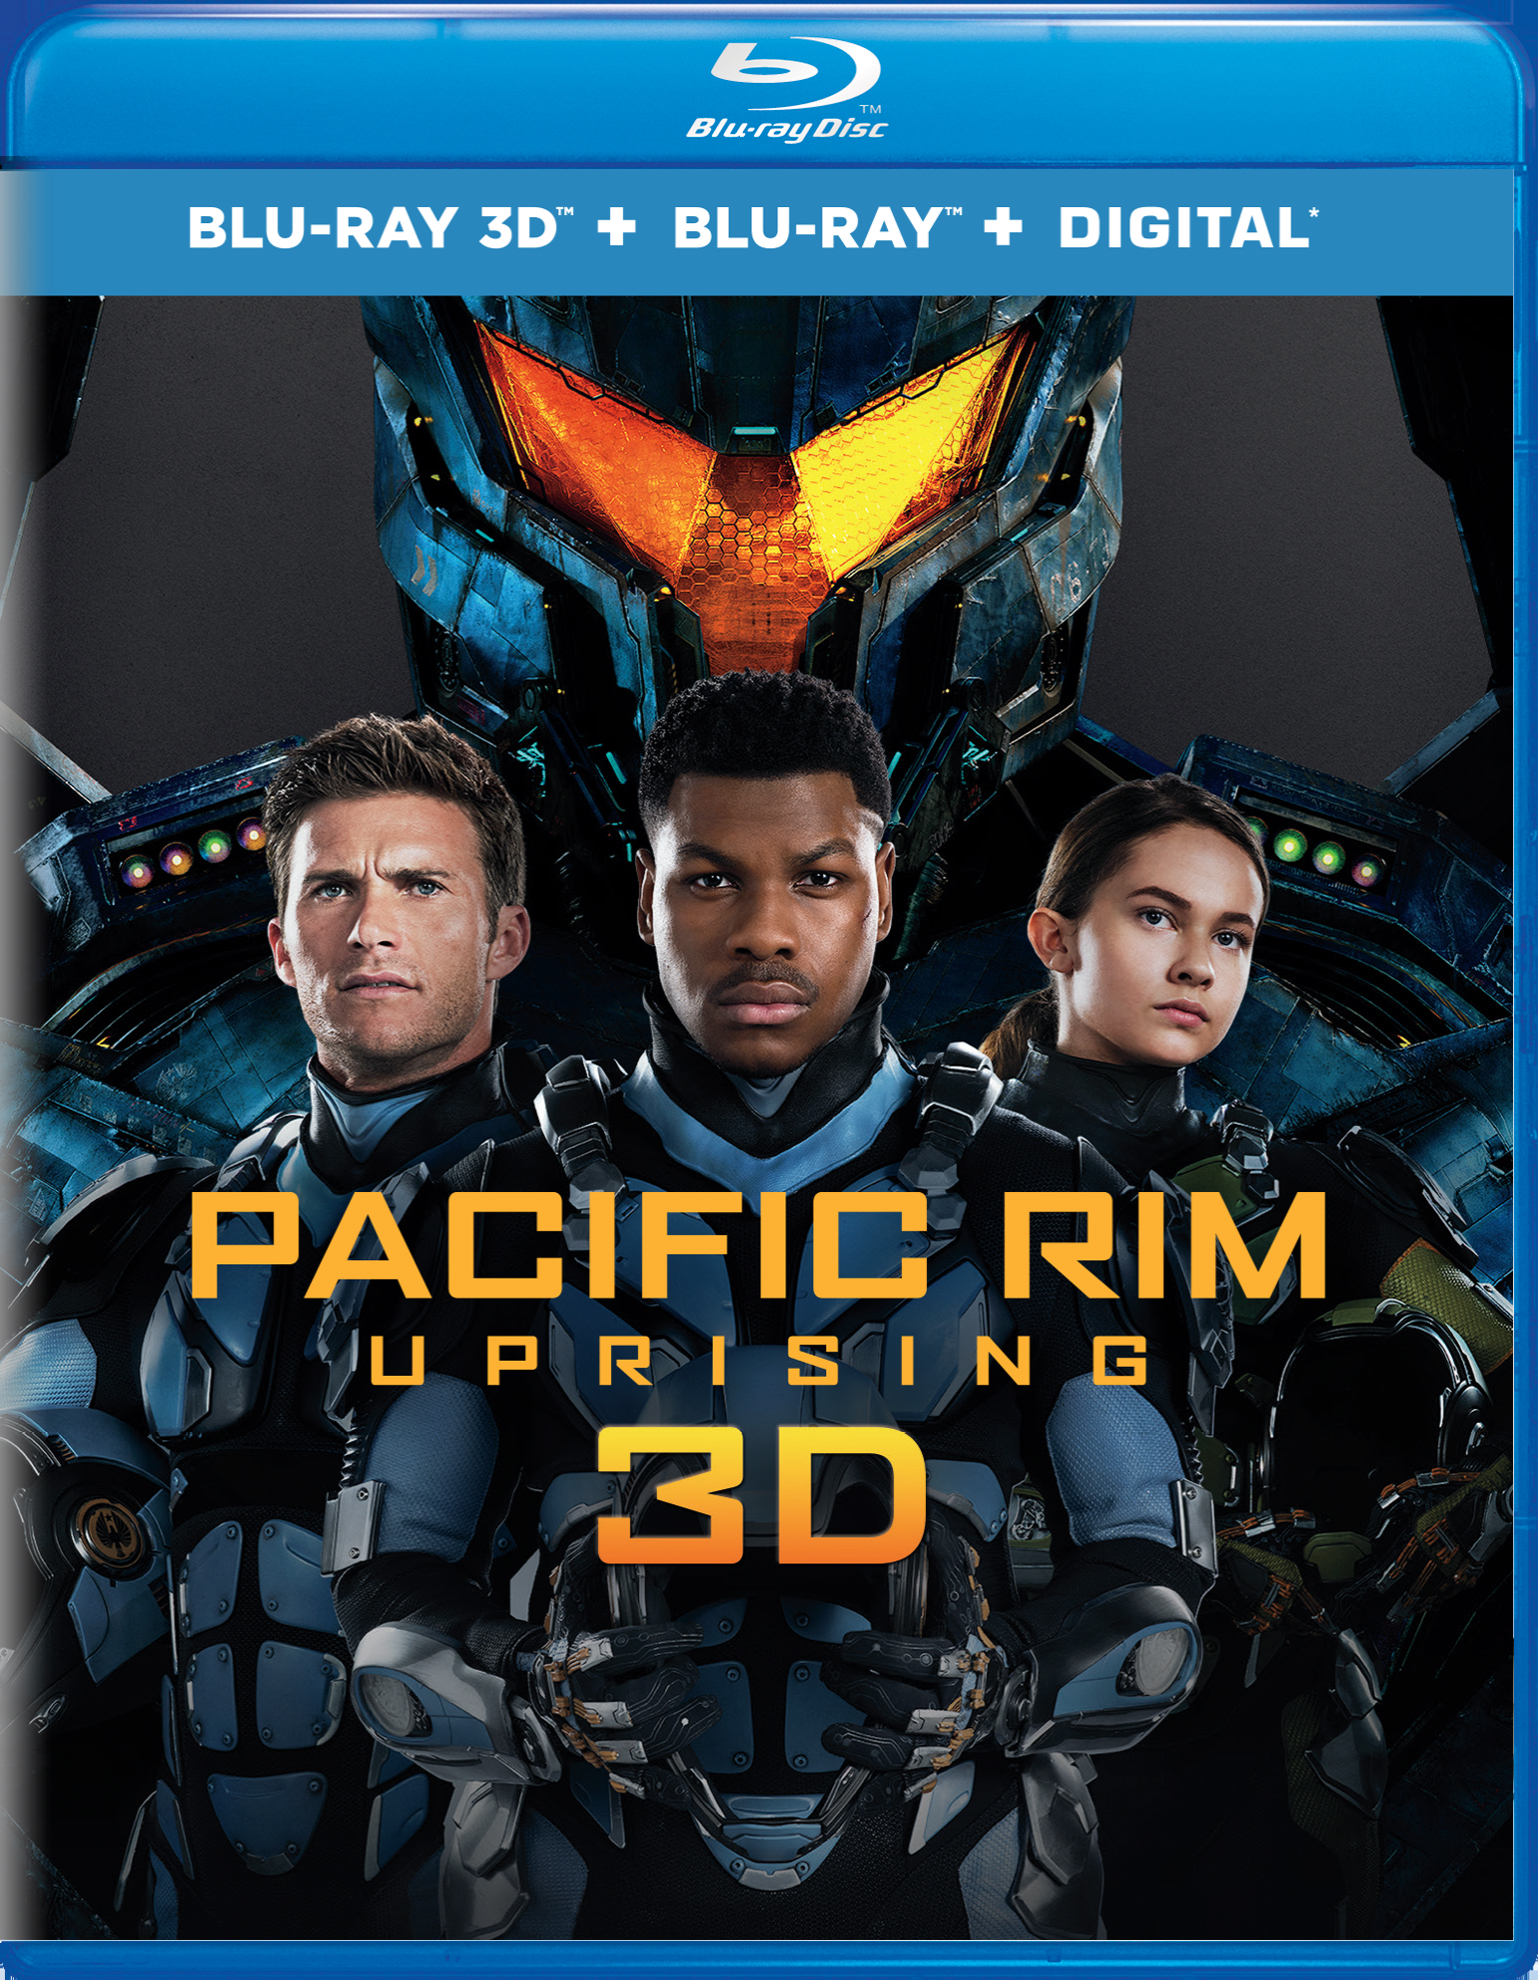 Pacific Rim - Uprising 3D (Digital) - Blu-ray [ 2018 ]  - Sci Fi Movies On Blu-ray - Movies On GRUV